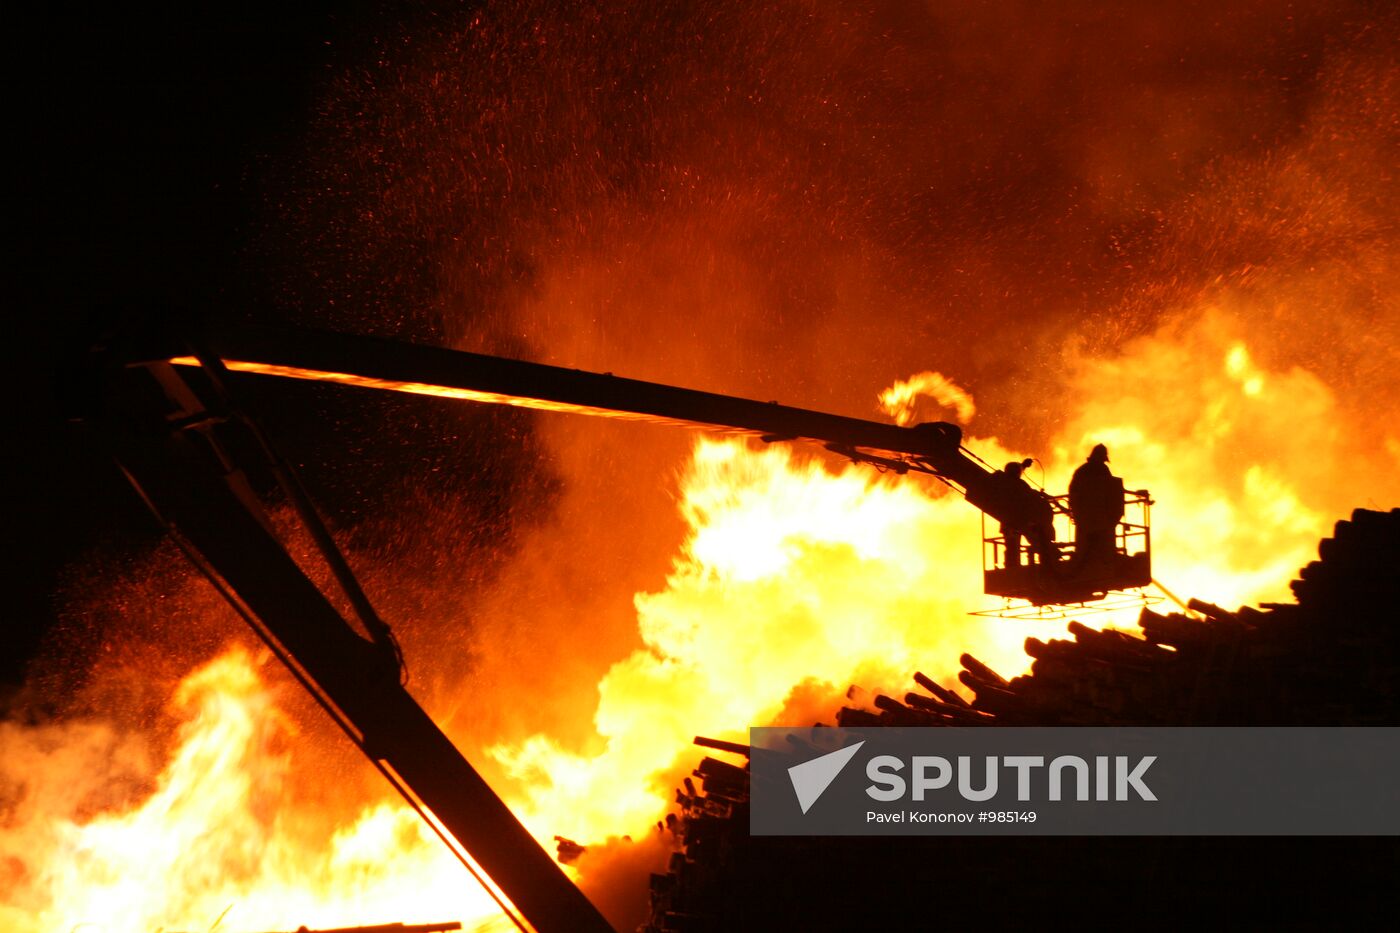 Fire crews battle blaze at Arkhangelsk river port